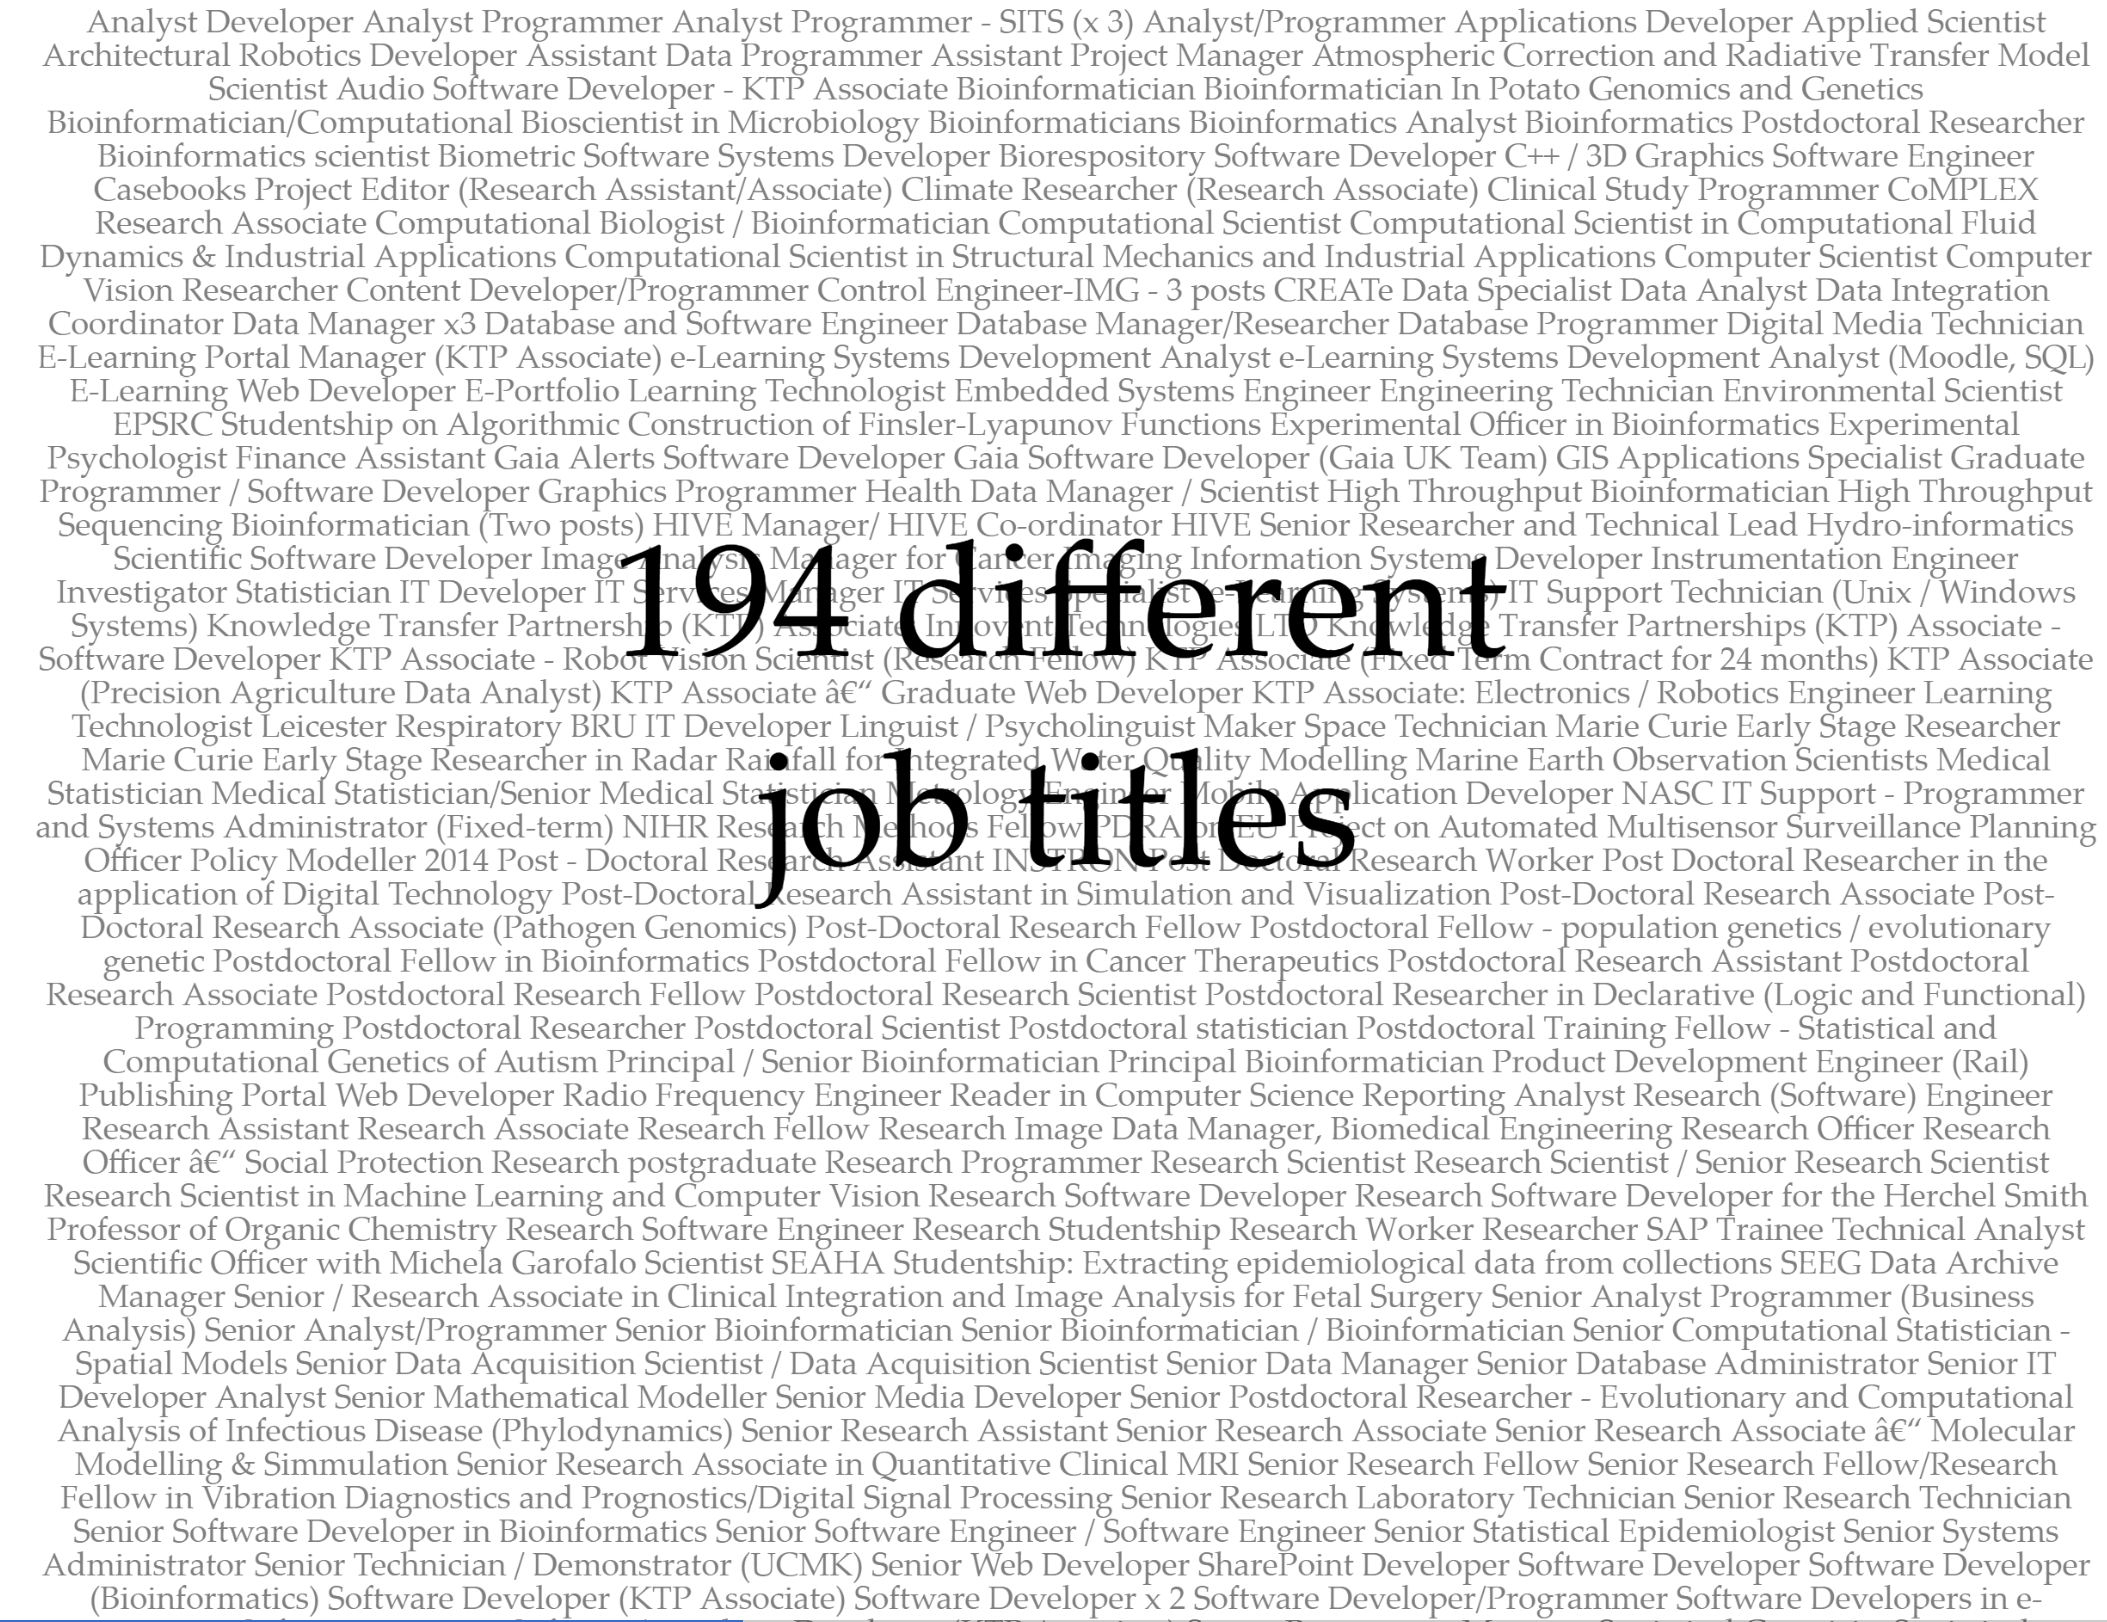 One job. 194 job titles